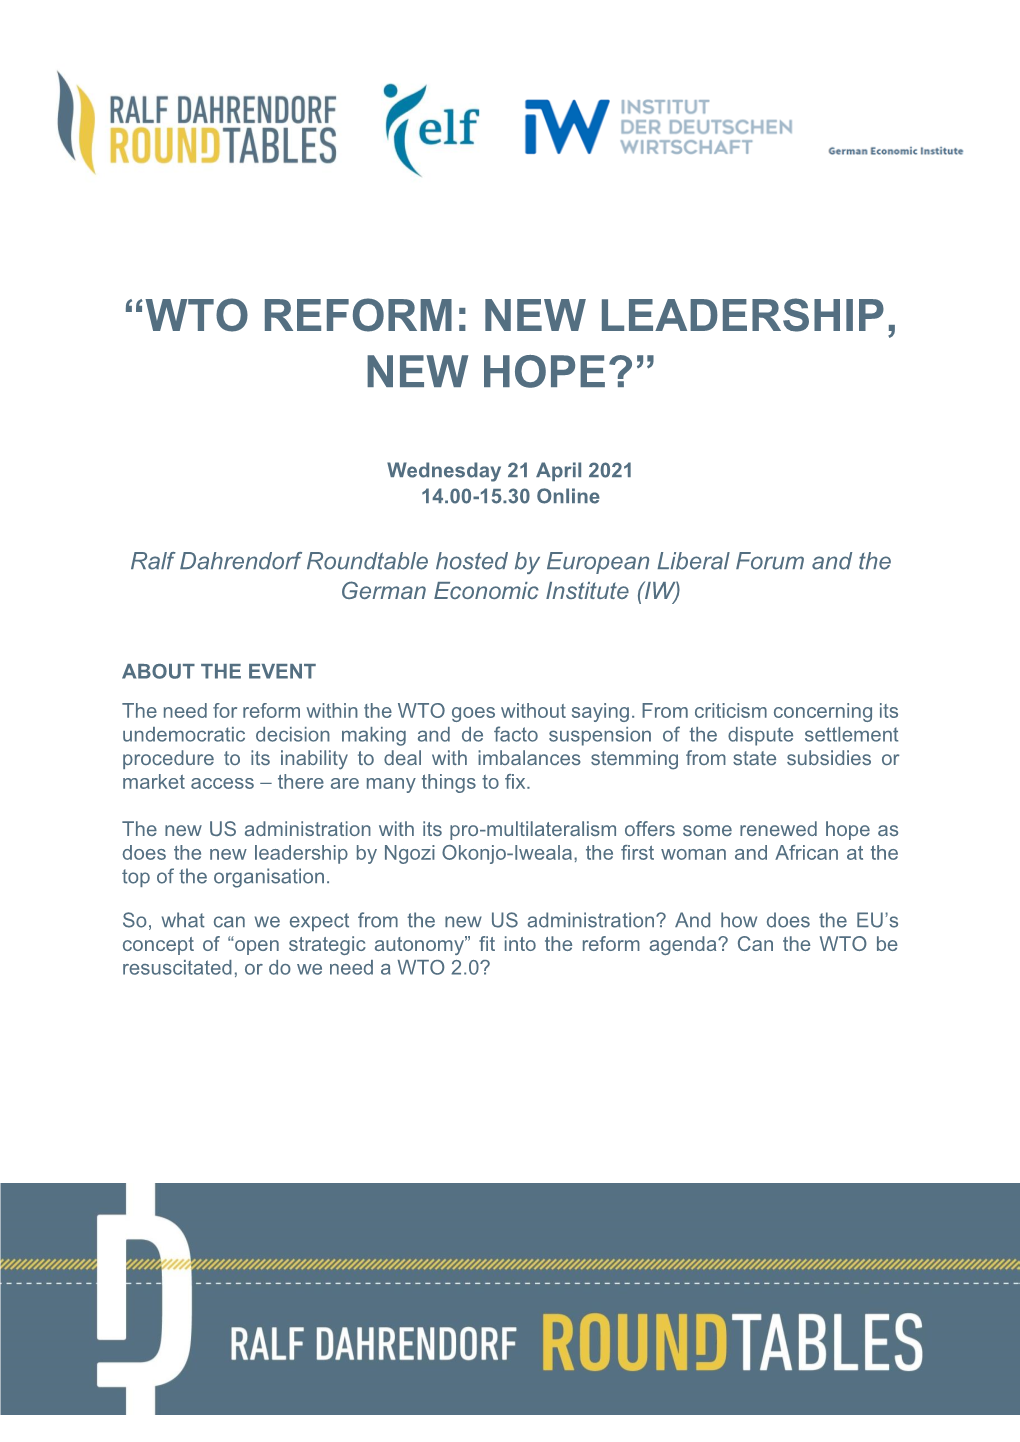 “Wto Reform: New Leadership, New Hope?”